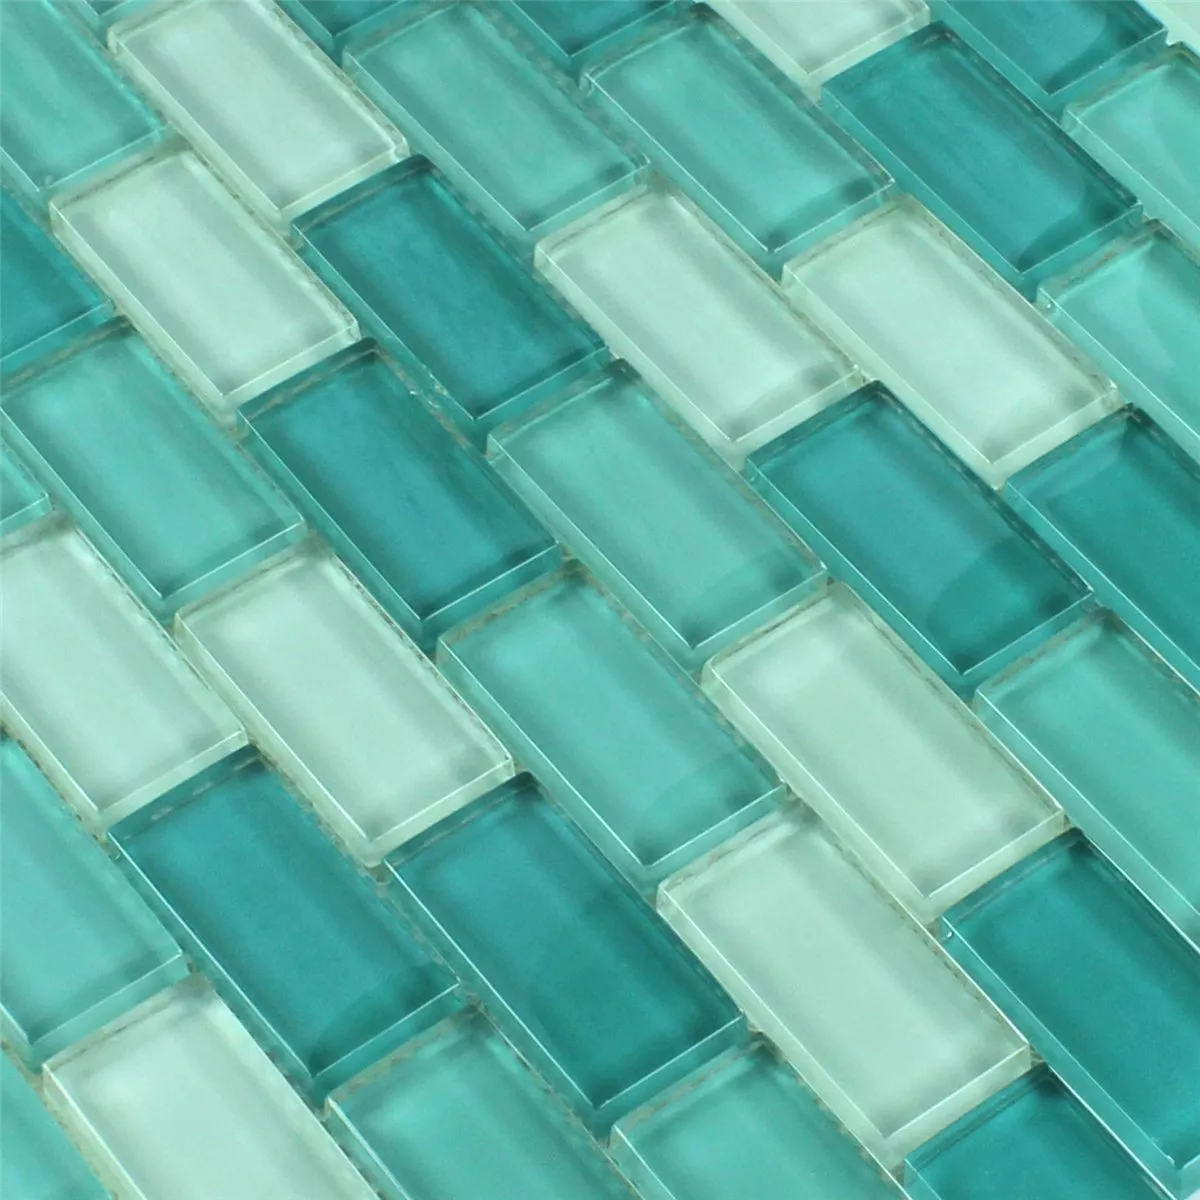 Sample Mosaic Tiles Glass Brick Green Mix